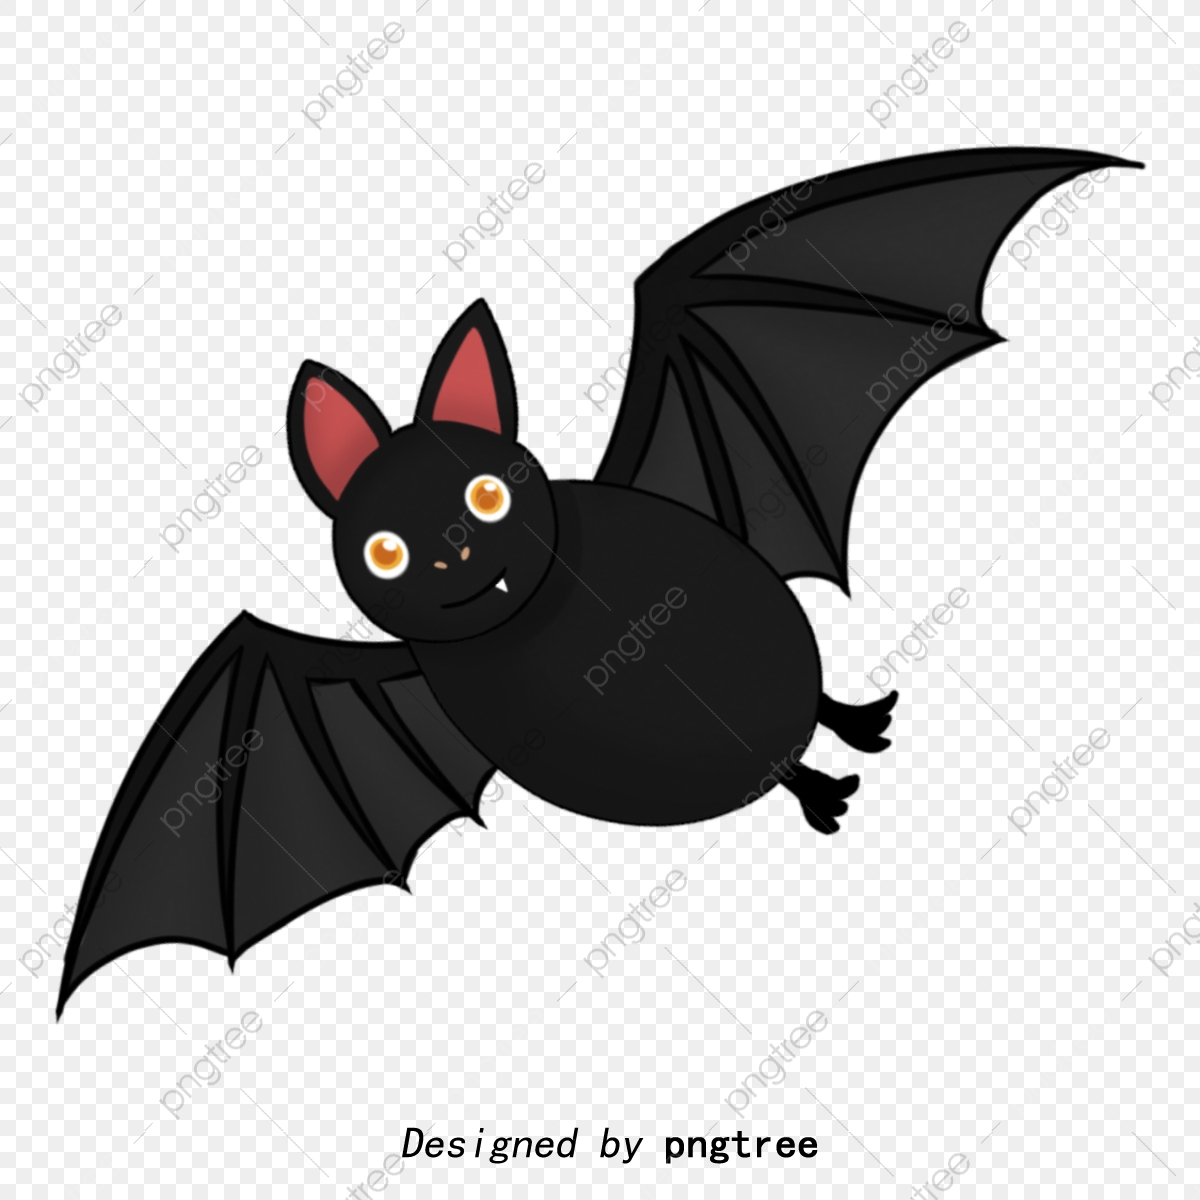 Bats clipart black object, Bats black object Transparent FREE for ...